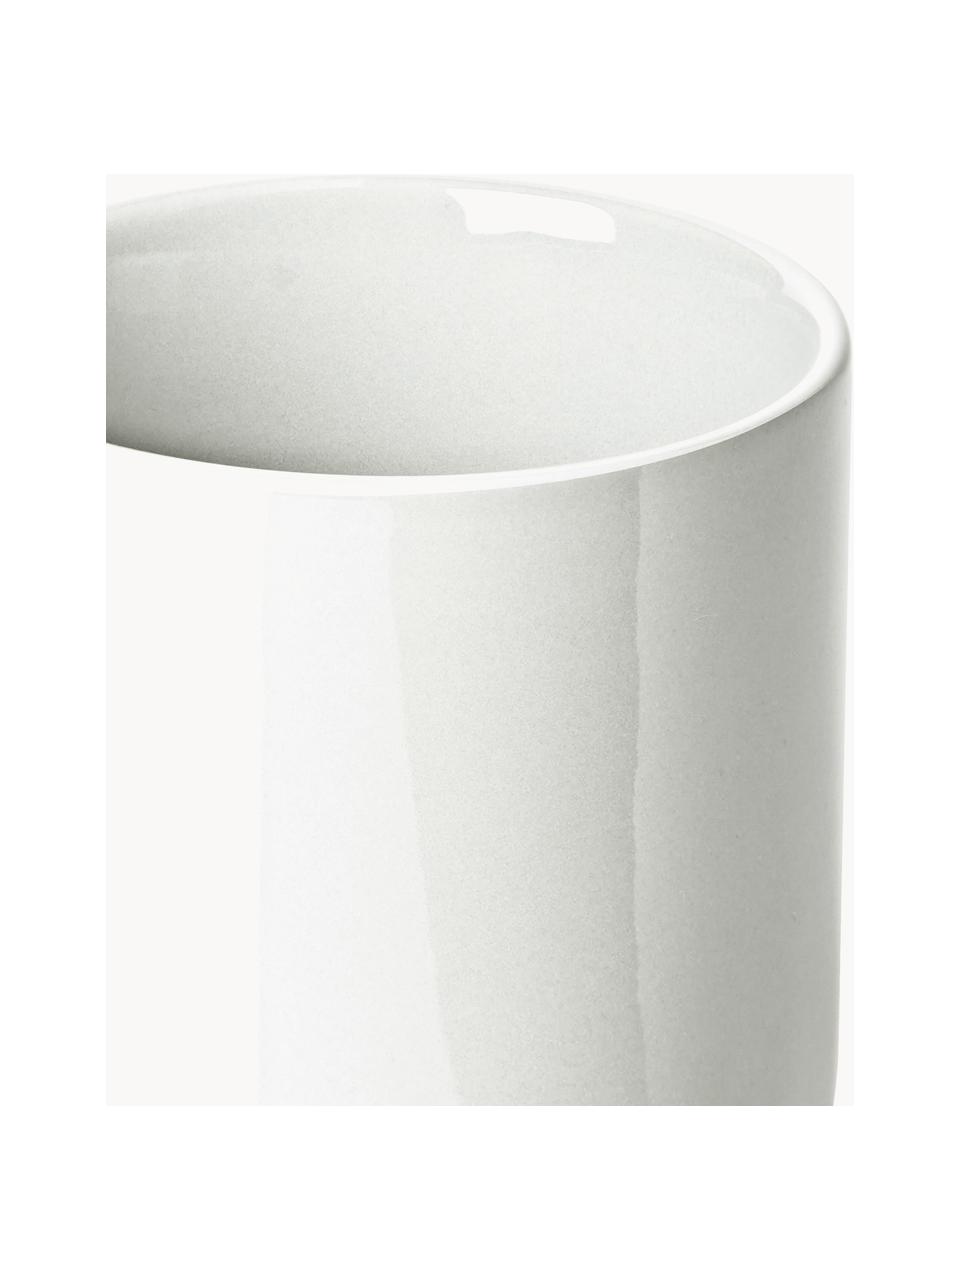 Porzellan-Kaffeebecher Nessa, 4 Stück, Hochwertiges Hartporzellan, glasiert, Off White, glänzend, Ø 8 x H 10 cm, 200 ml